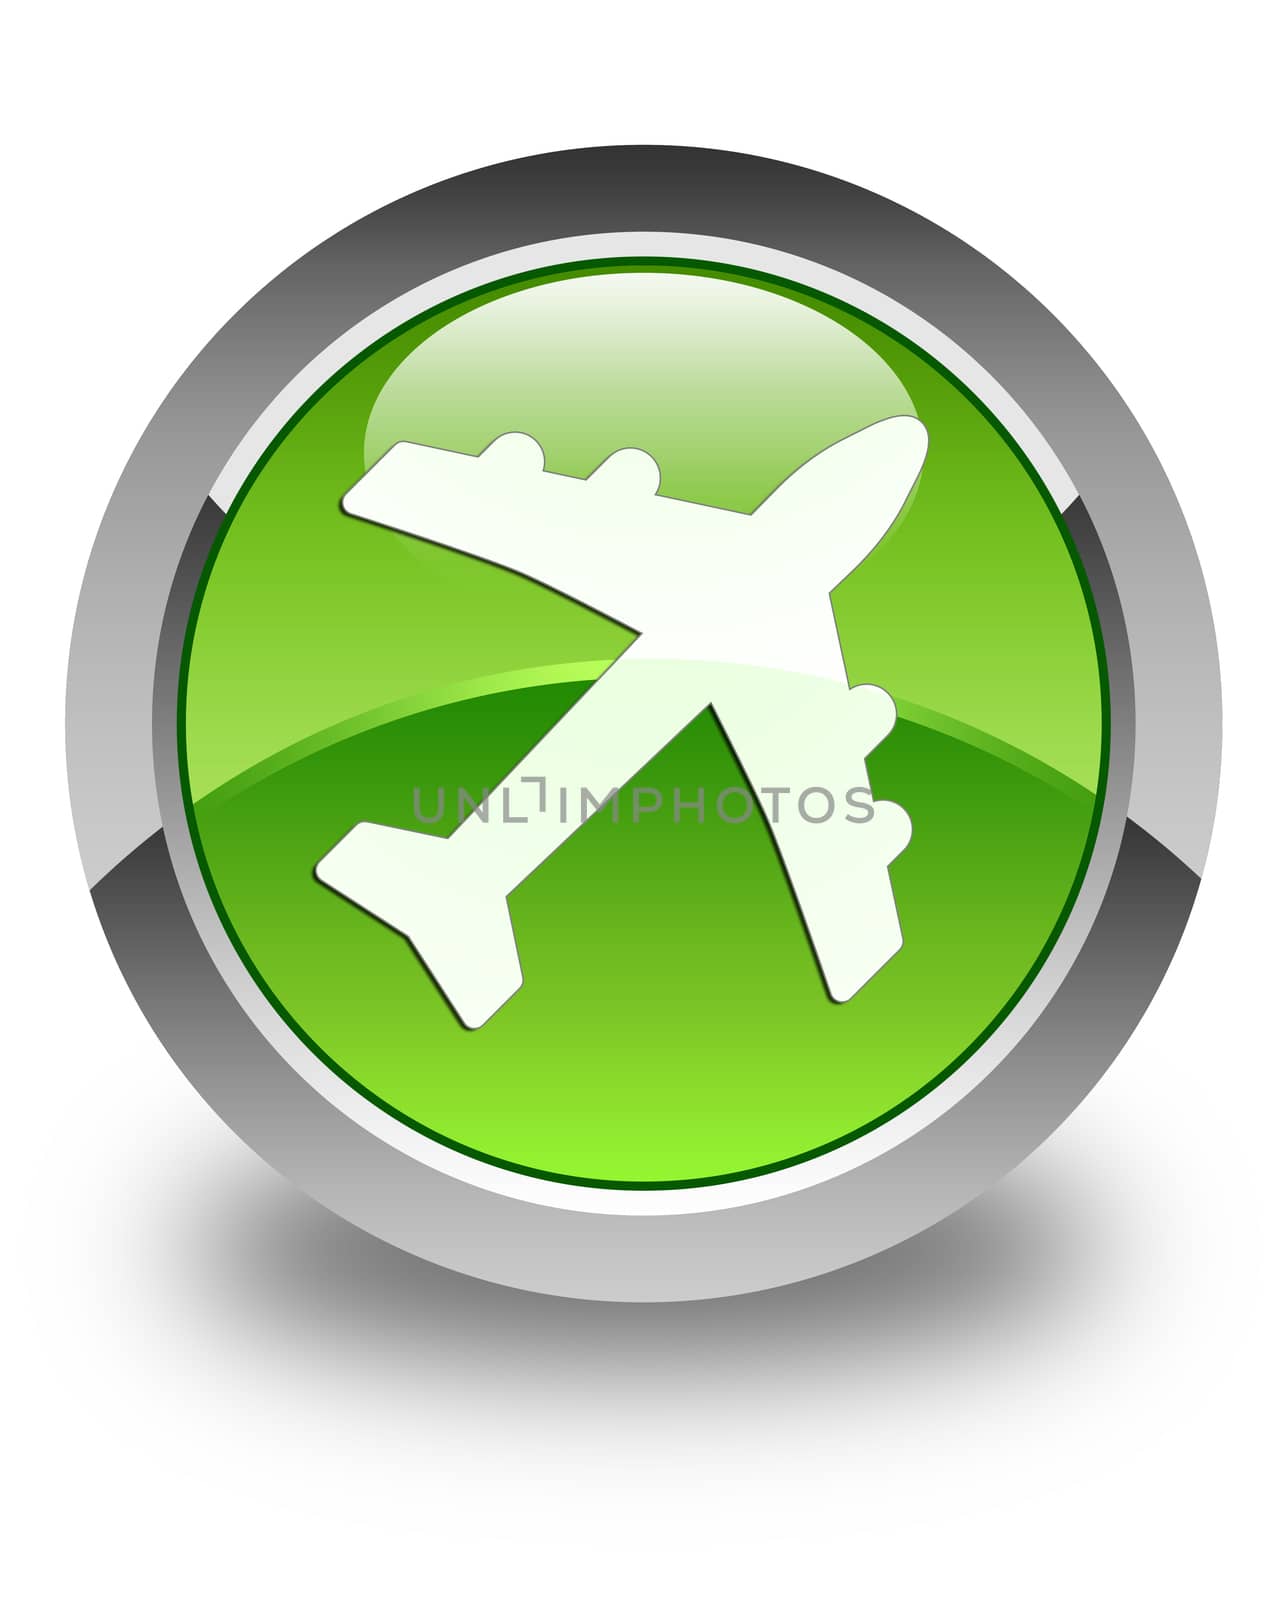 Plane icon on glossy green round button